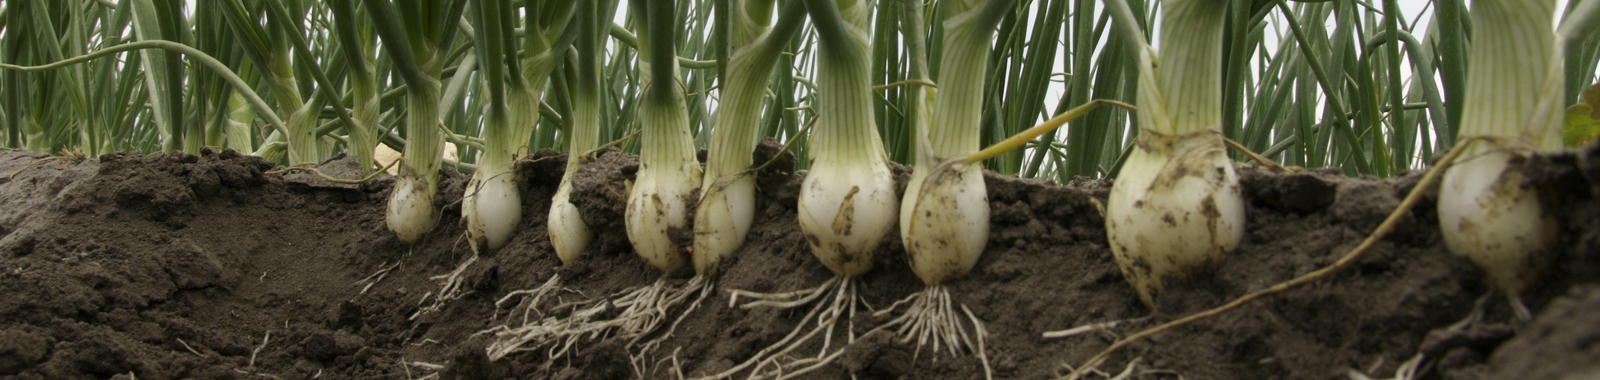 Onion crop nutrition programme